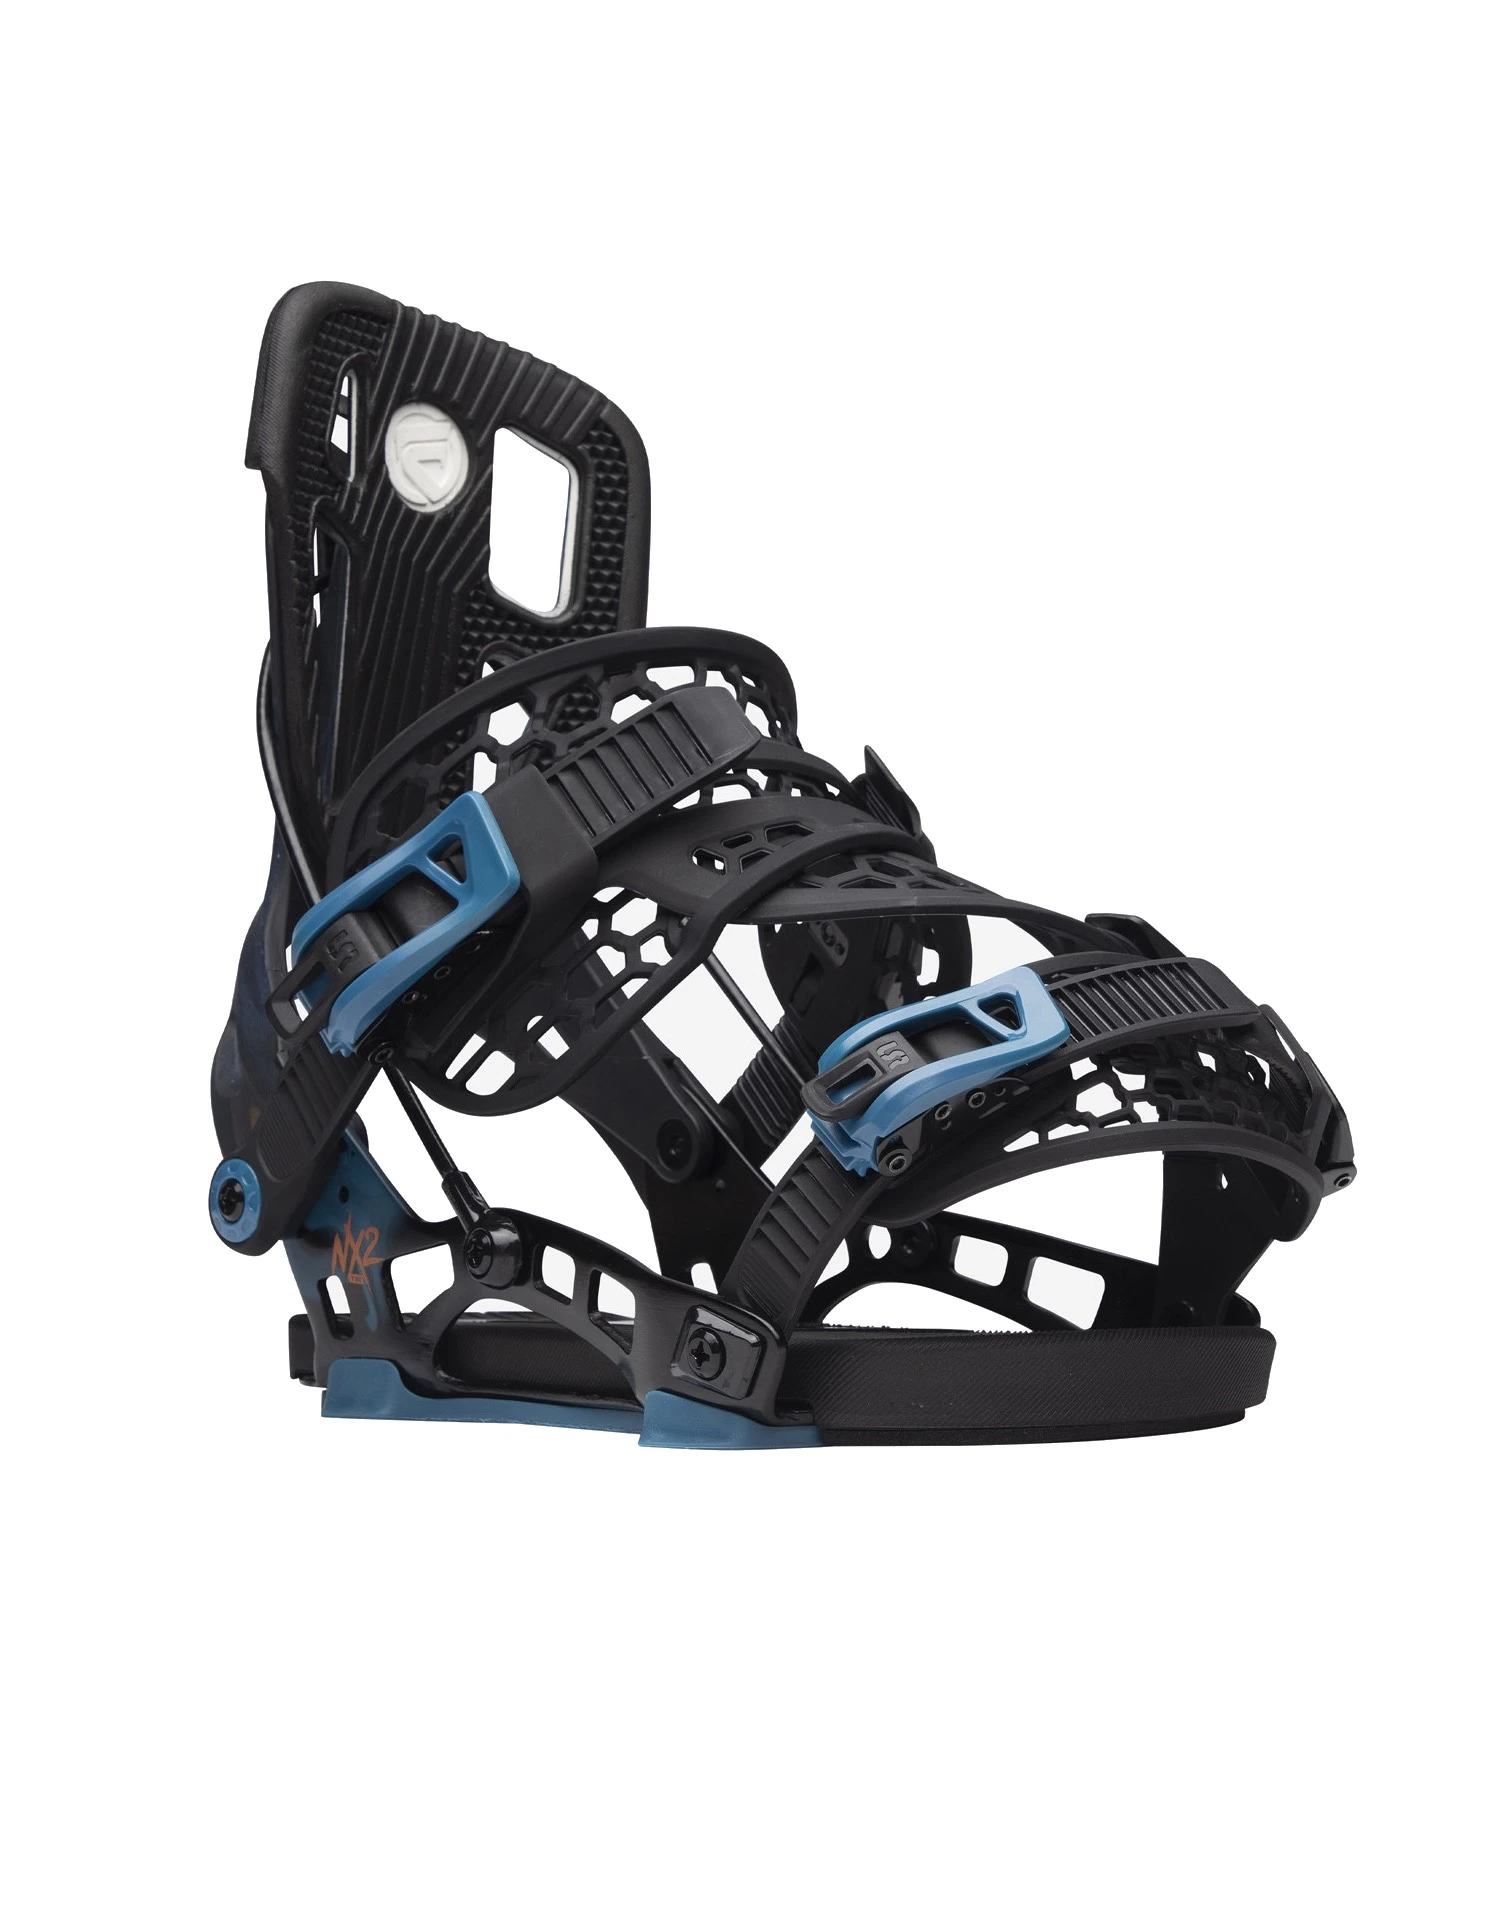 Flow NX2-TM Hybrid snowboard binding